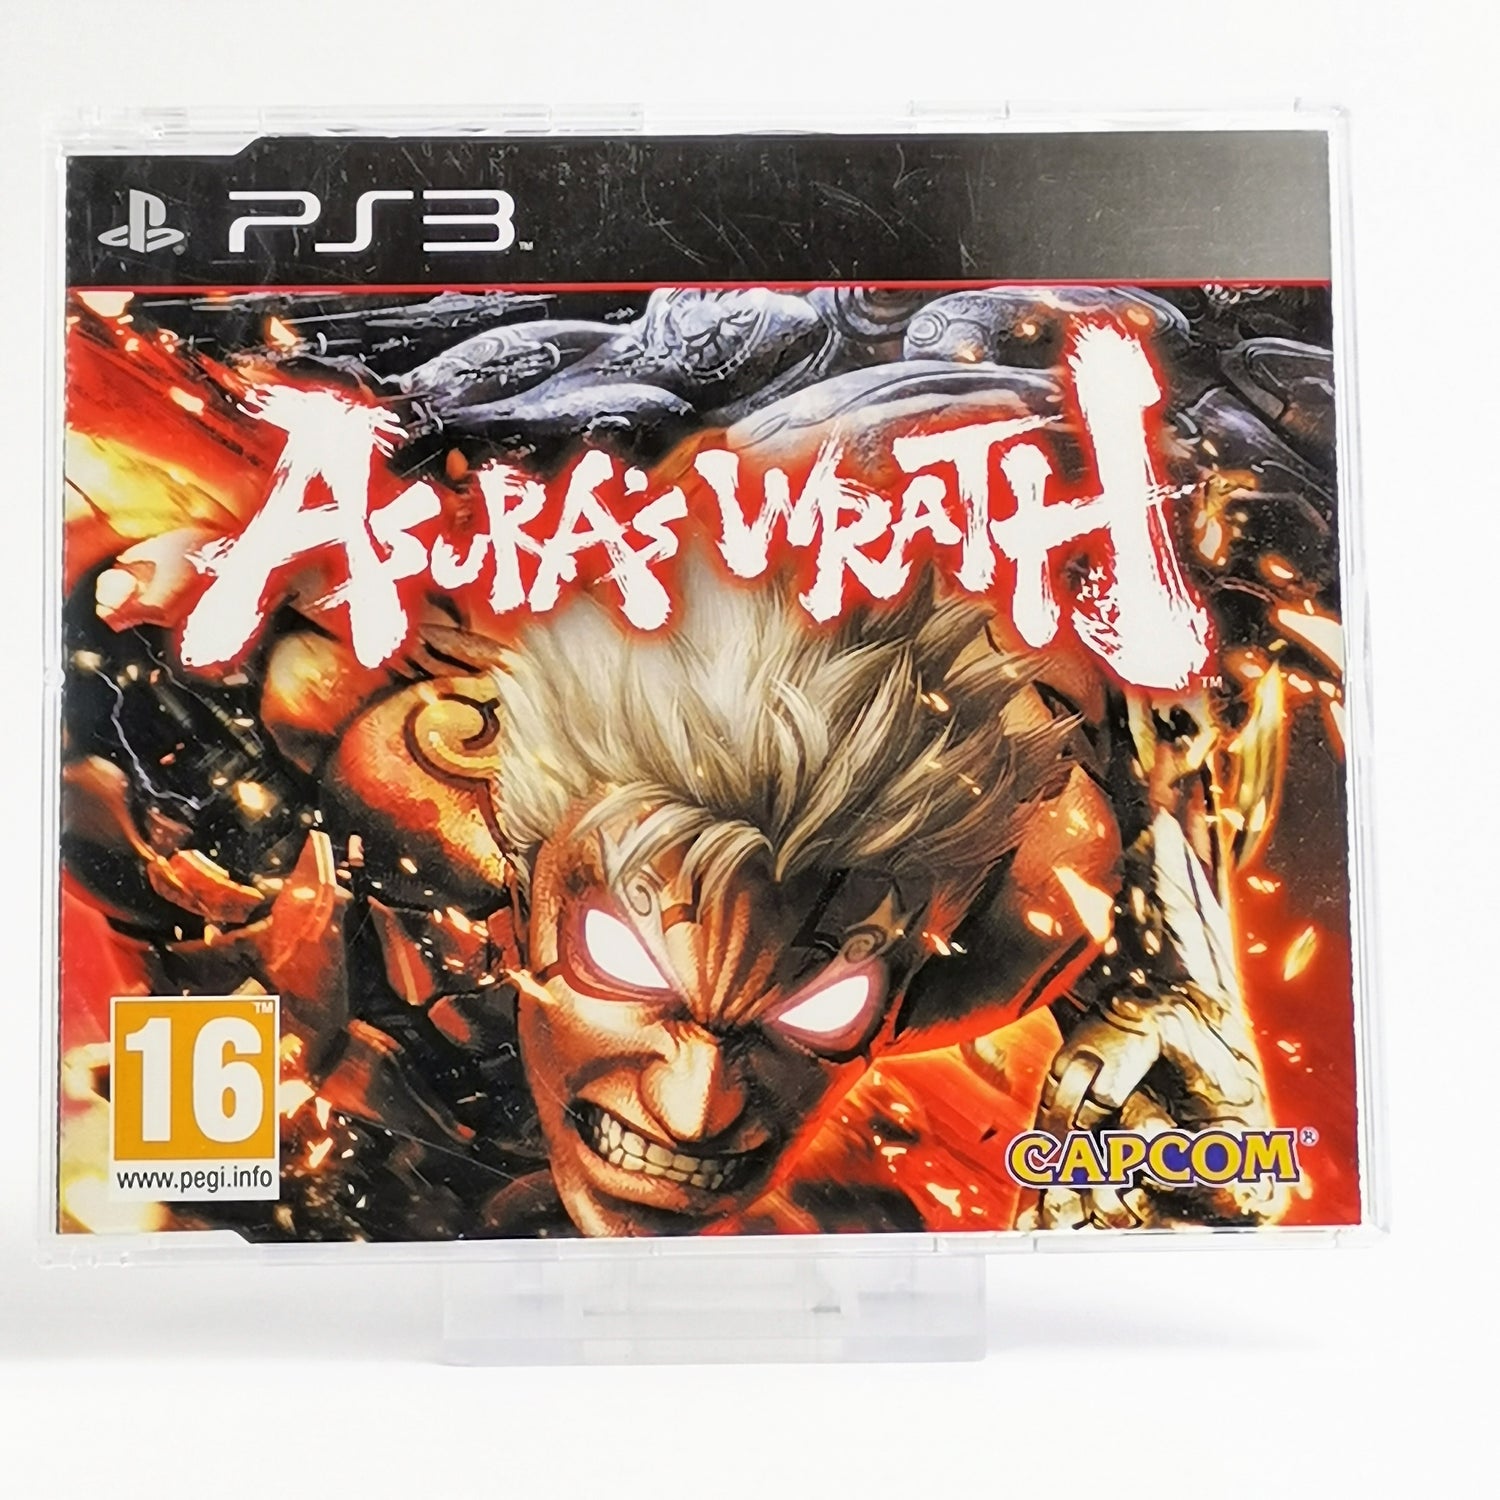 Sony Playstation 3 Promo: Asura's Wrath - Full Version | PS3 original packaging